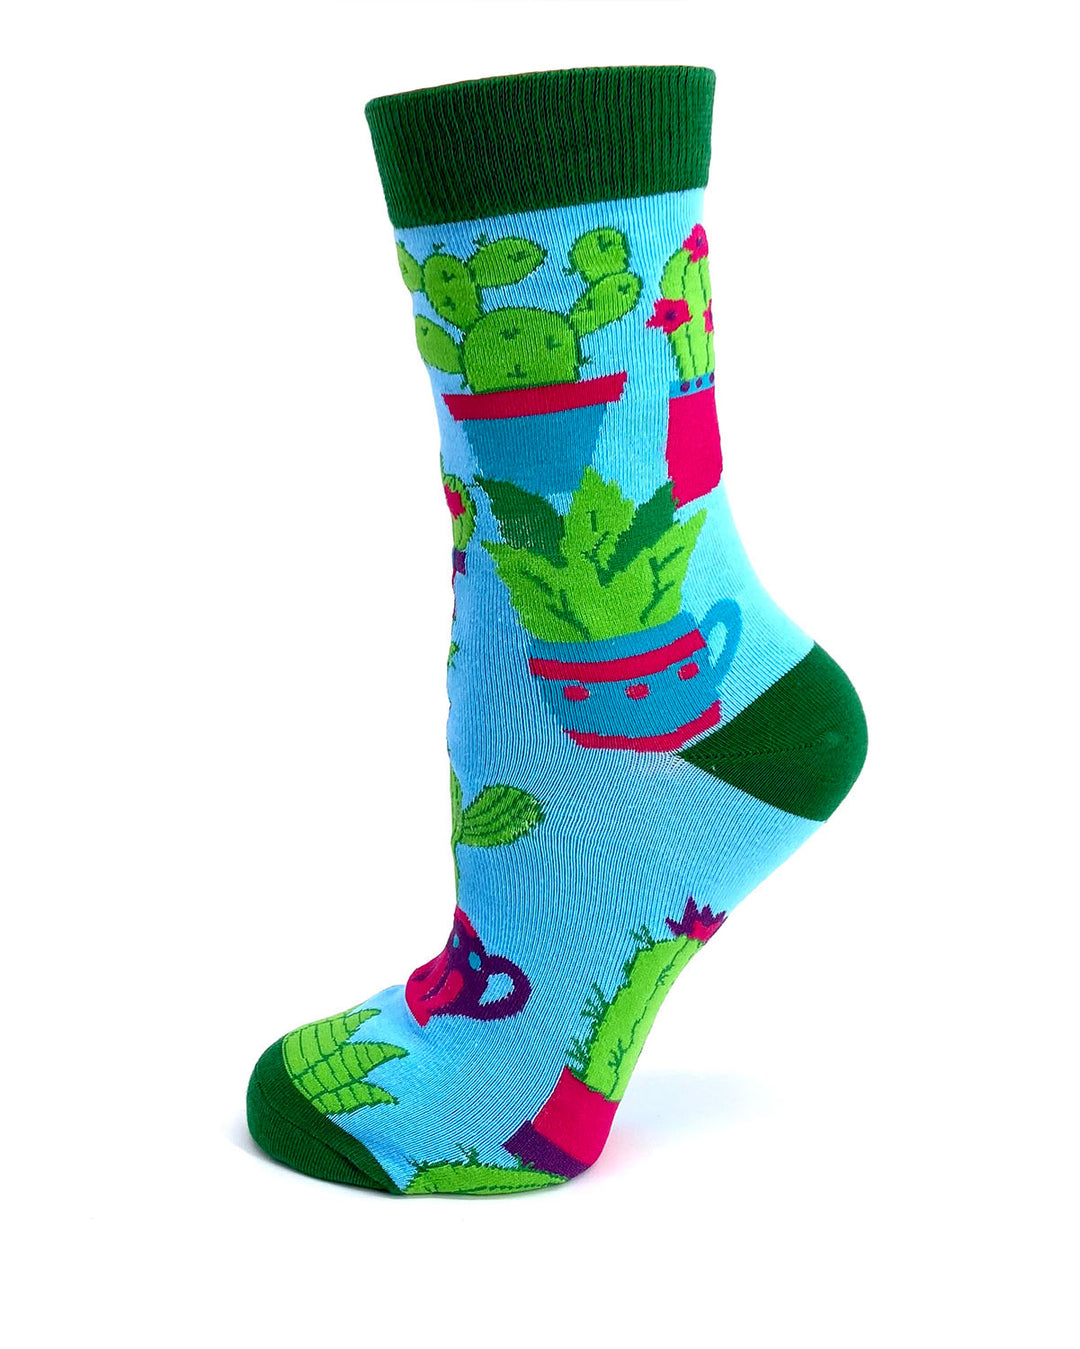 Potted Cactus Novelty Socks for Women